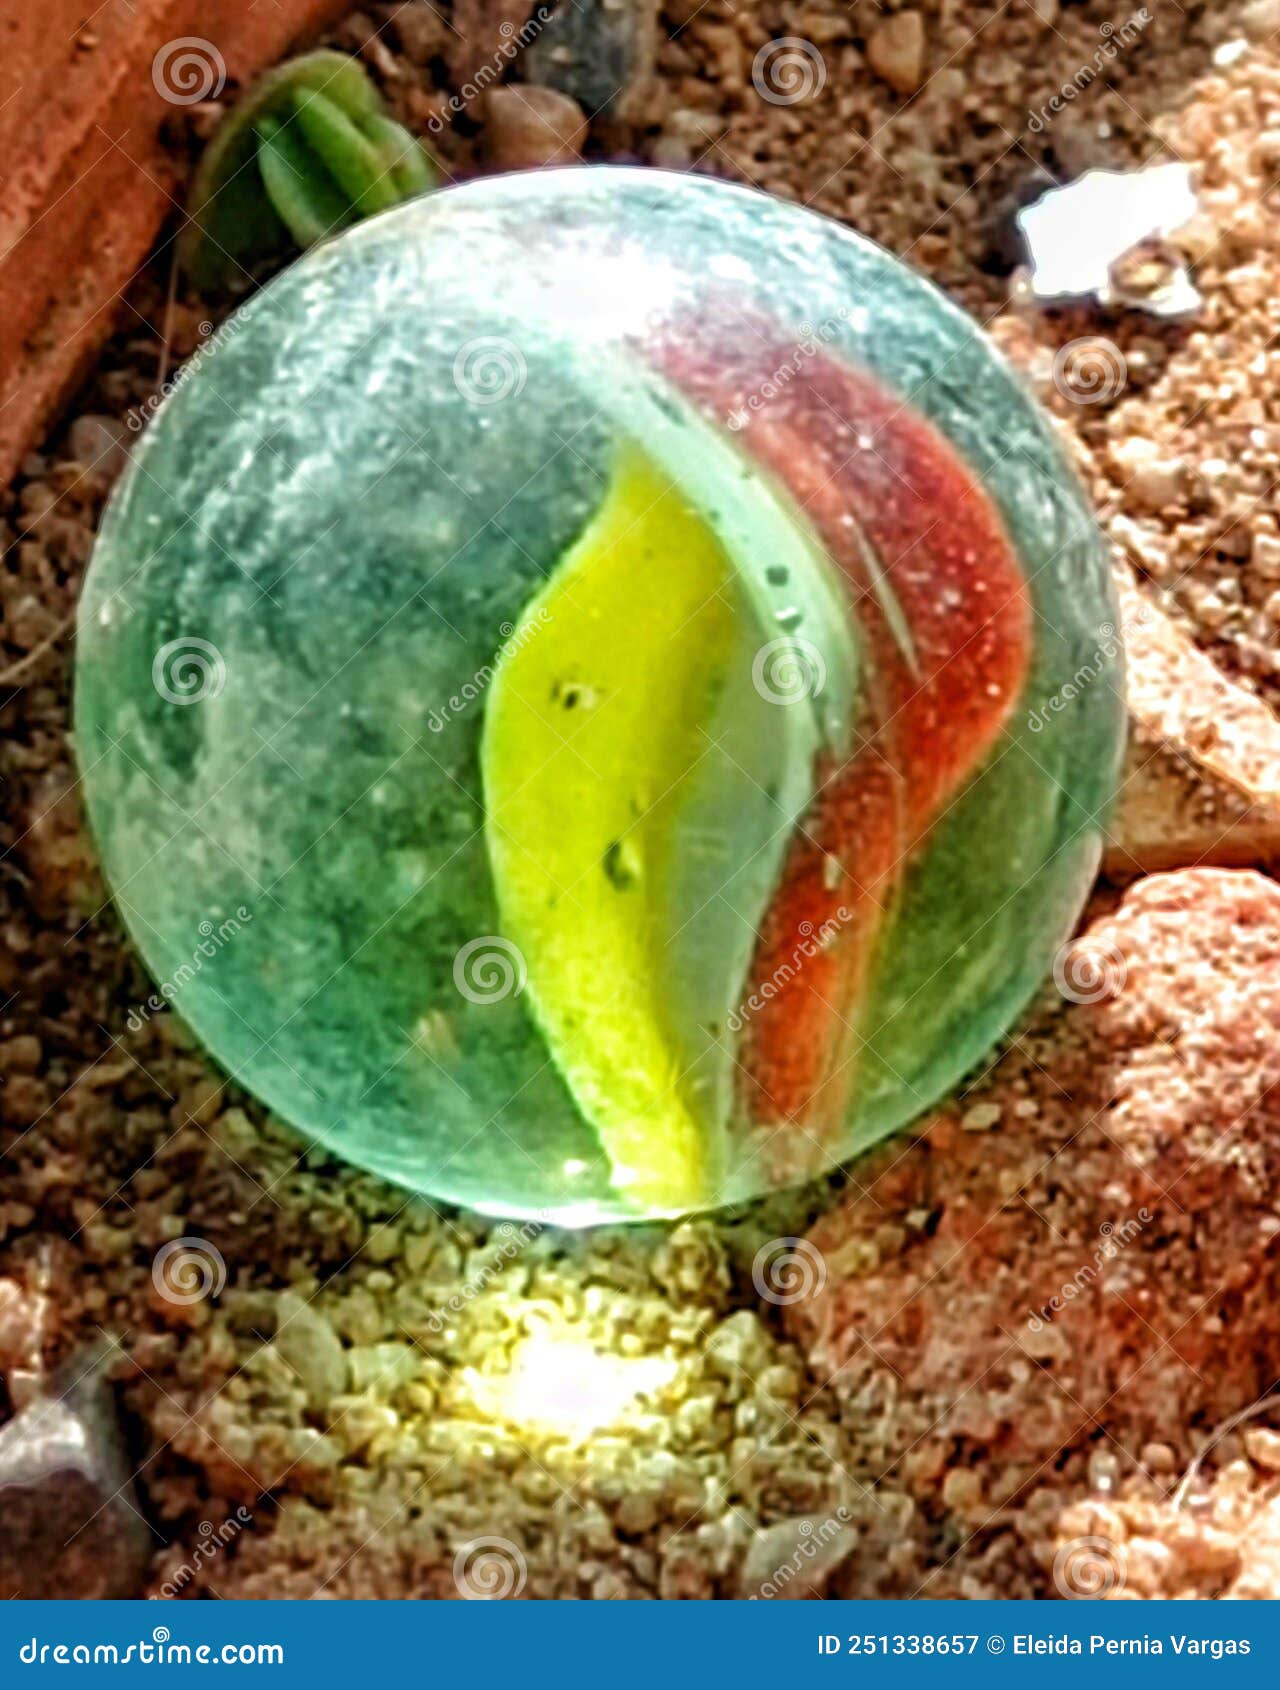 canica toy cristal ball metra transparent